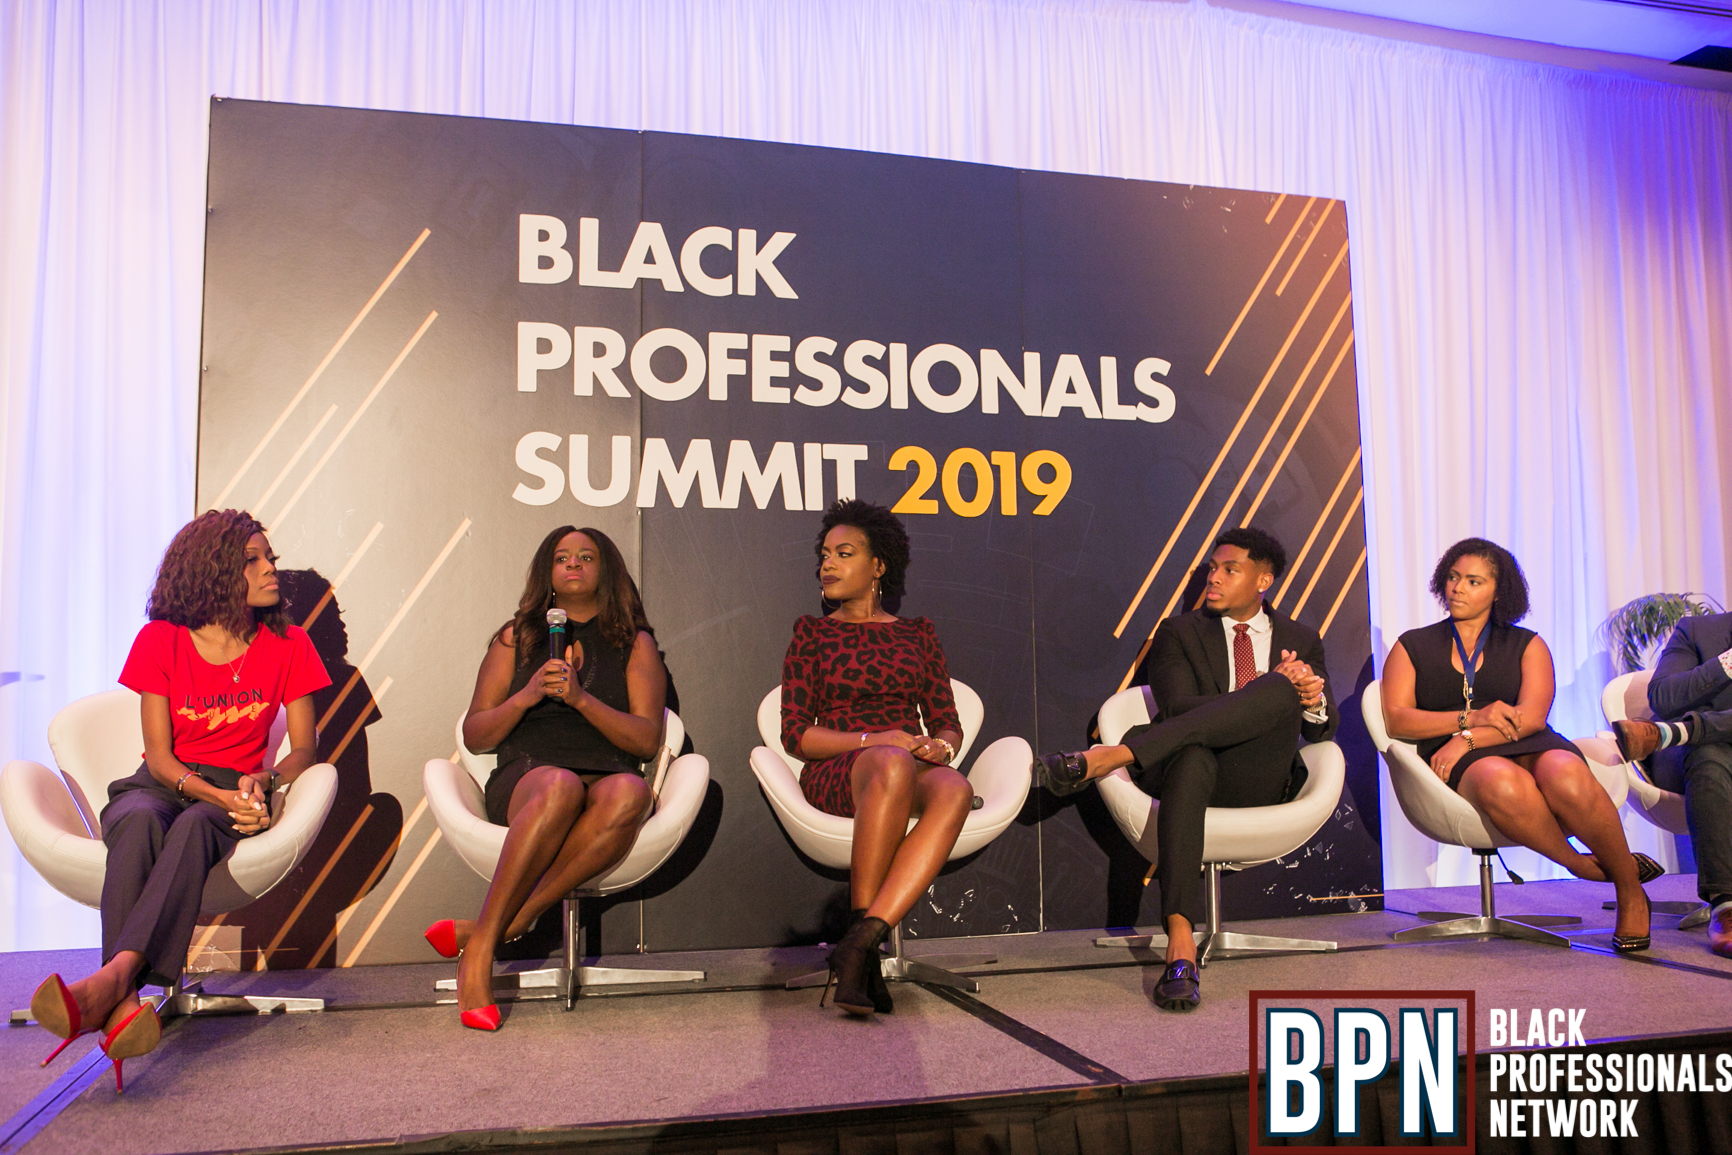 Gallery Black Professionals Summit